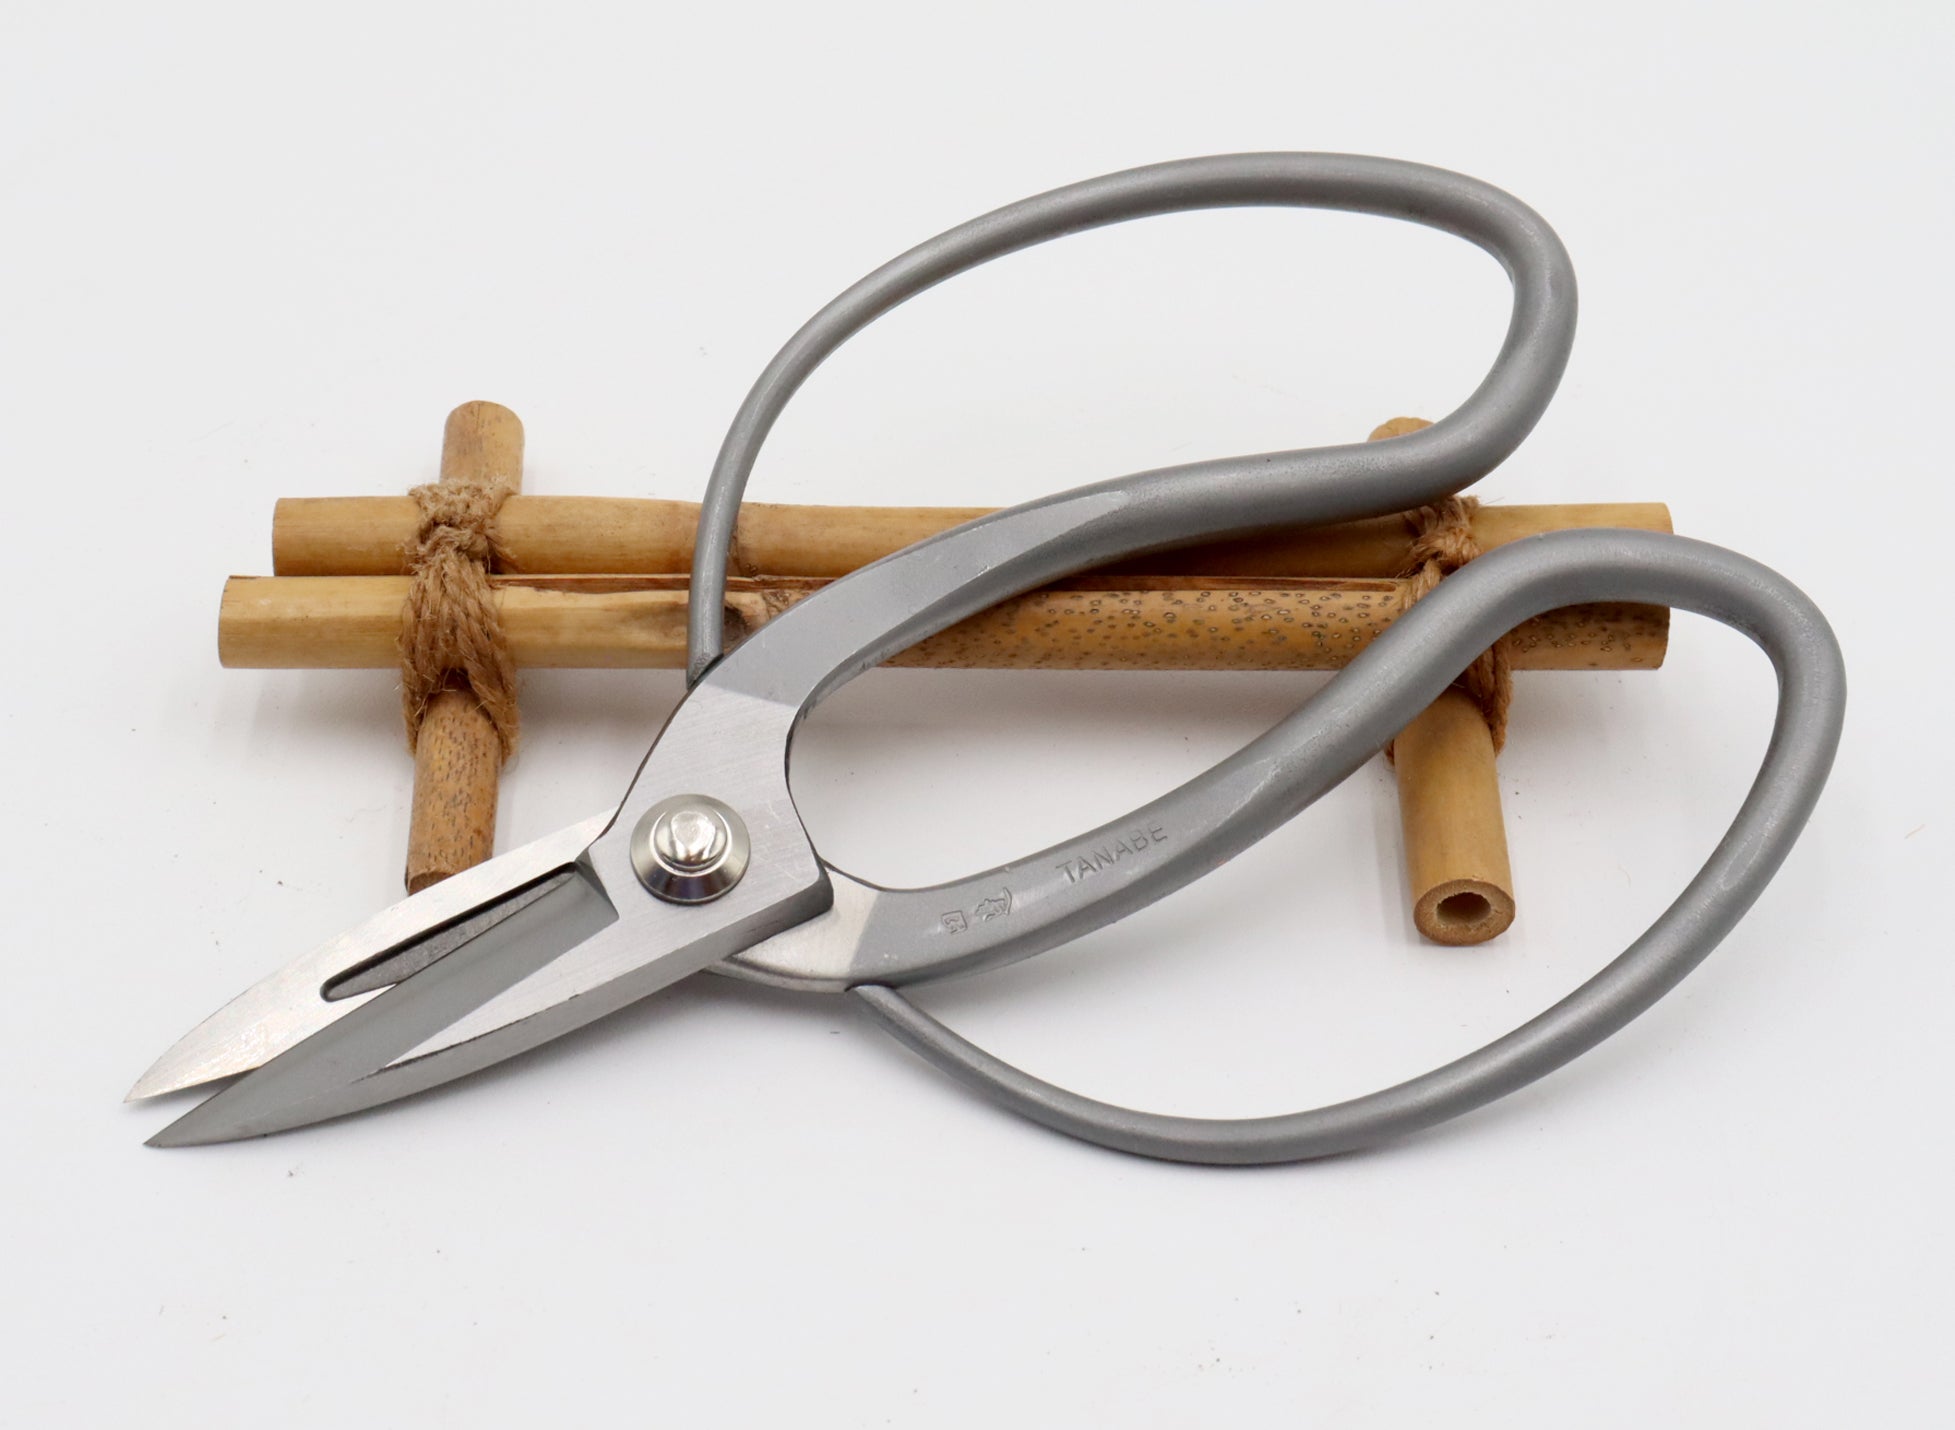 Stainless Steel Tanabe Gardening Scissors